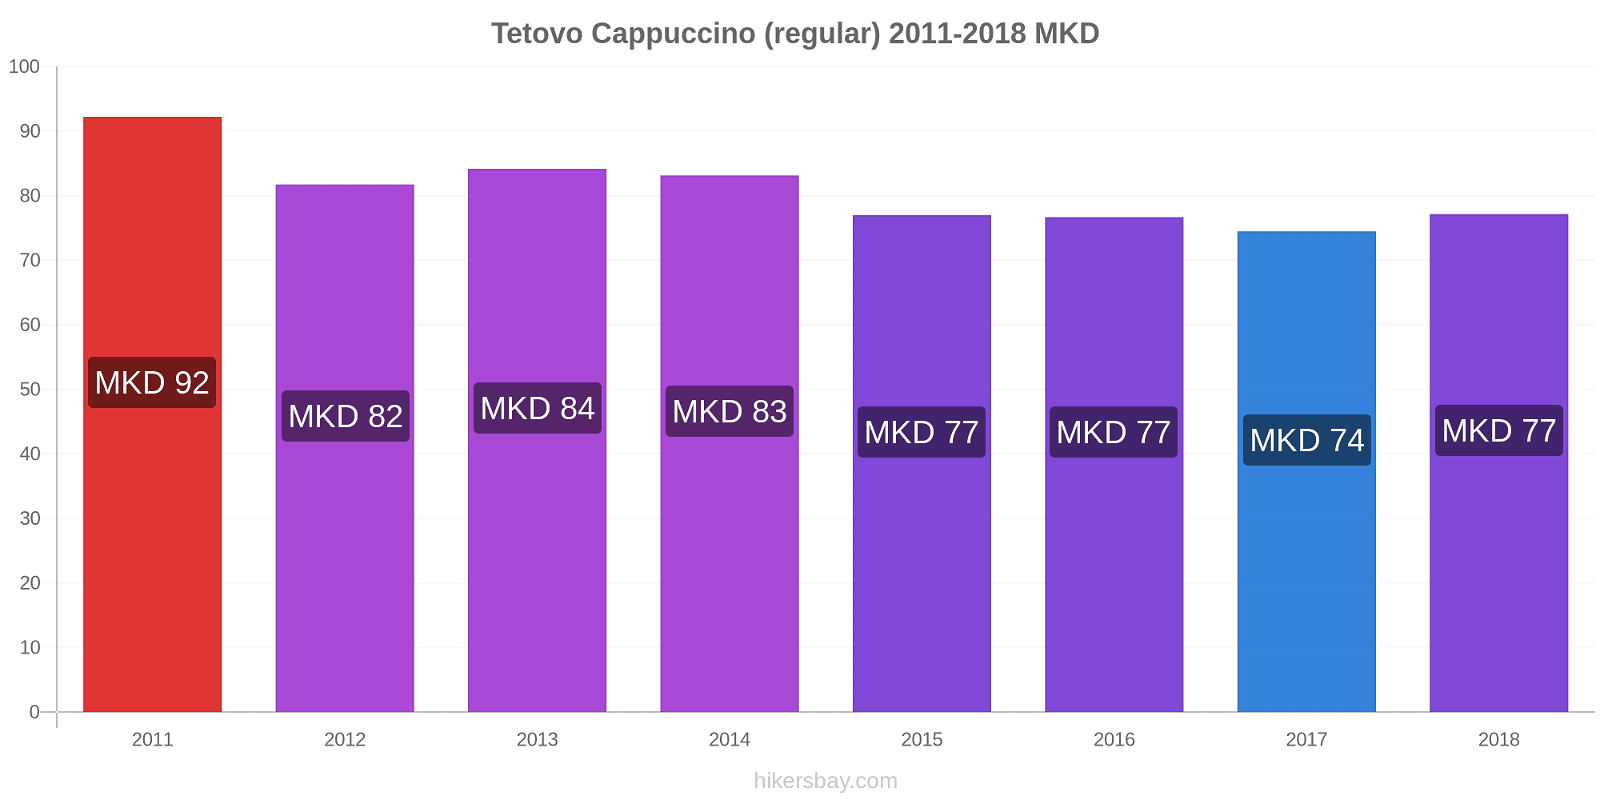 Tetovo price changes Cappuccino (regular) hikersbay.com